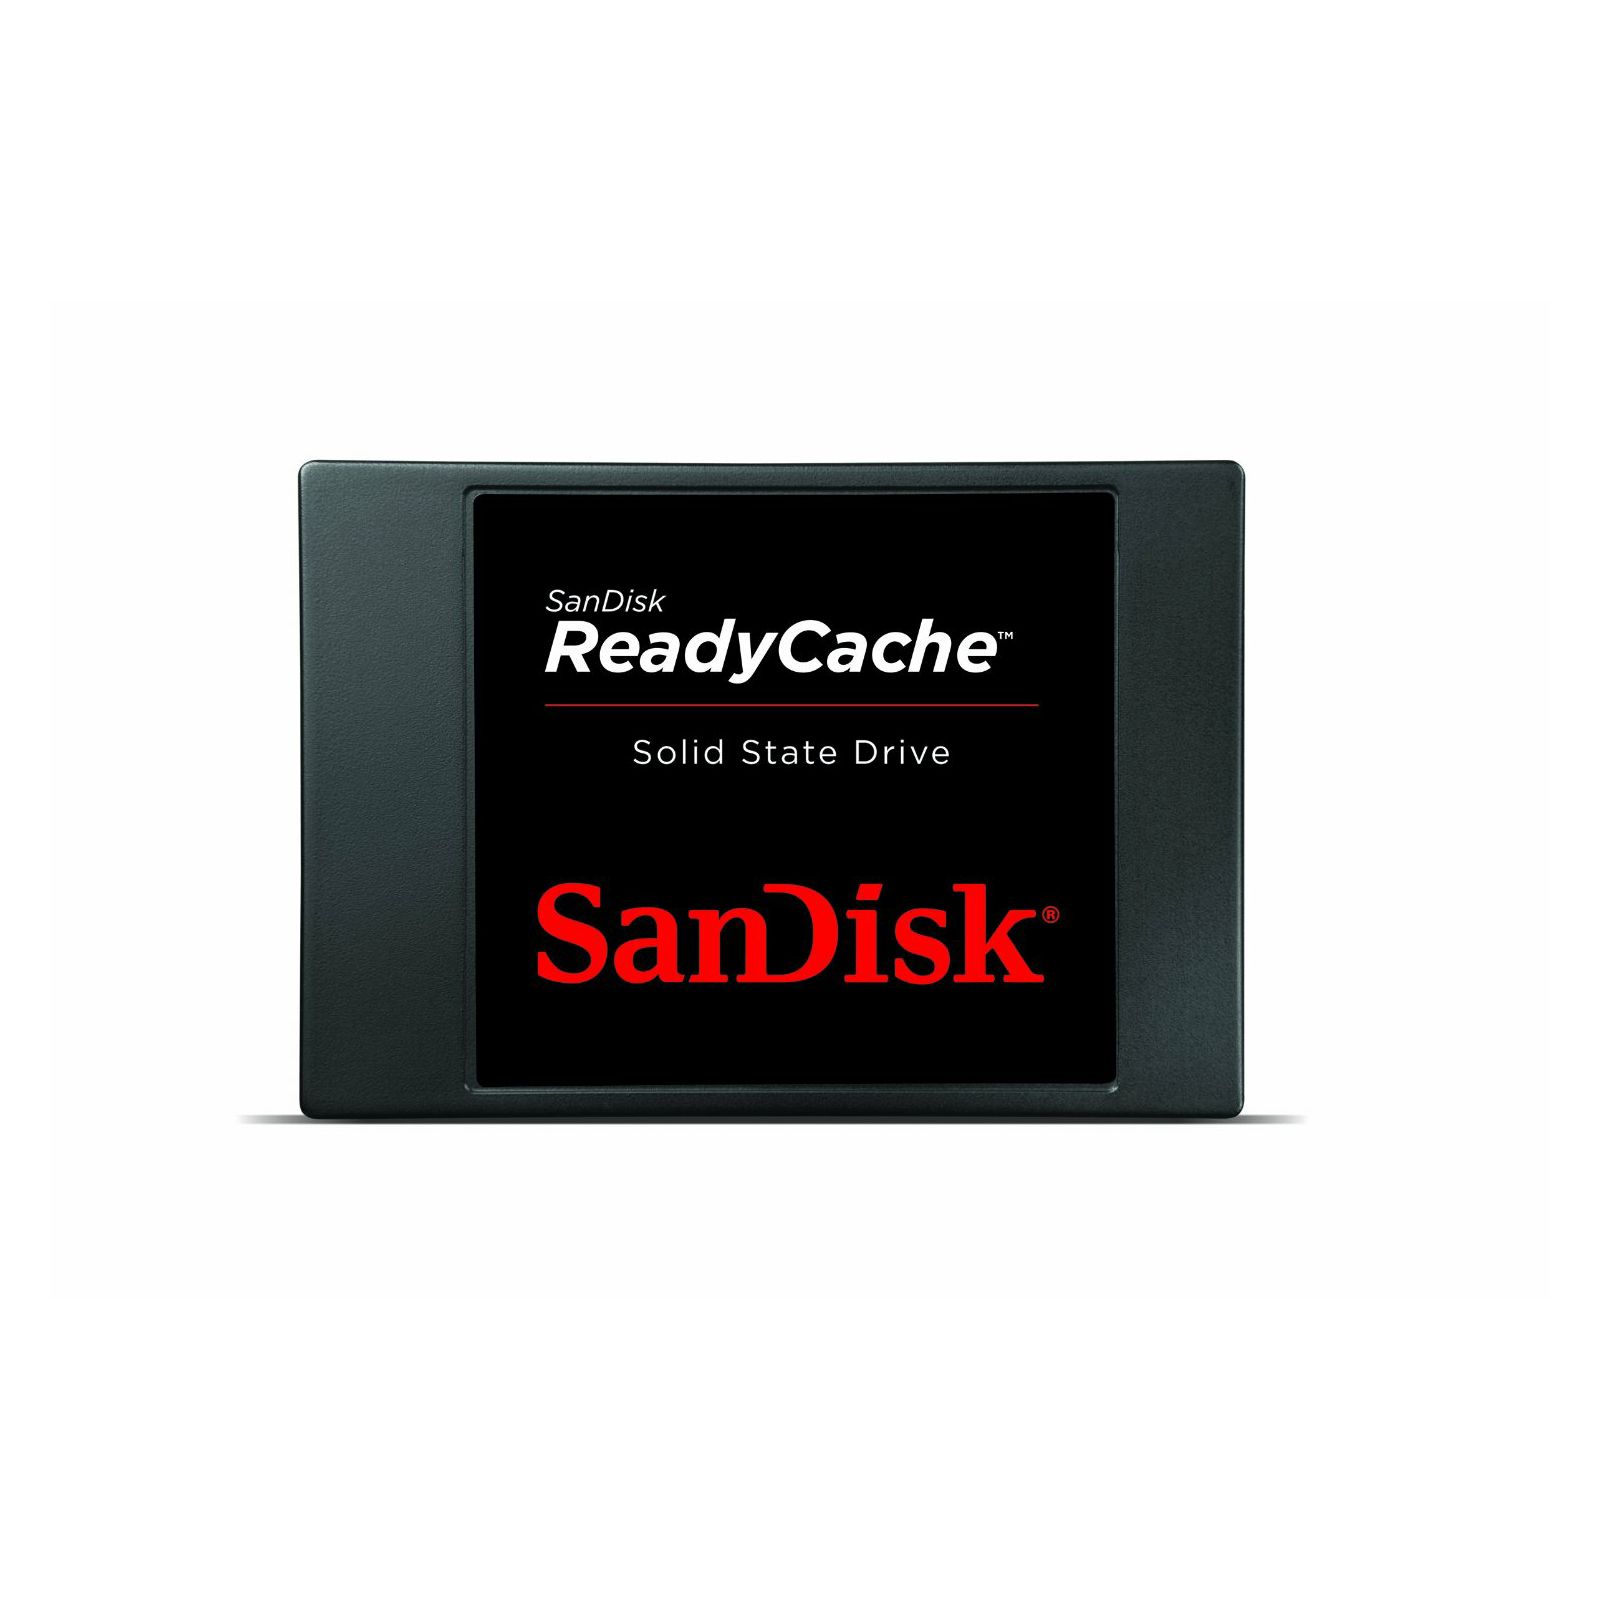 SanDisk ReadyCache 32GB SDSSDRC-032G-G26 Solid State Drive Disk